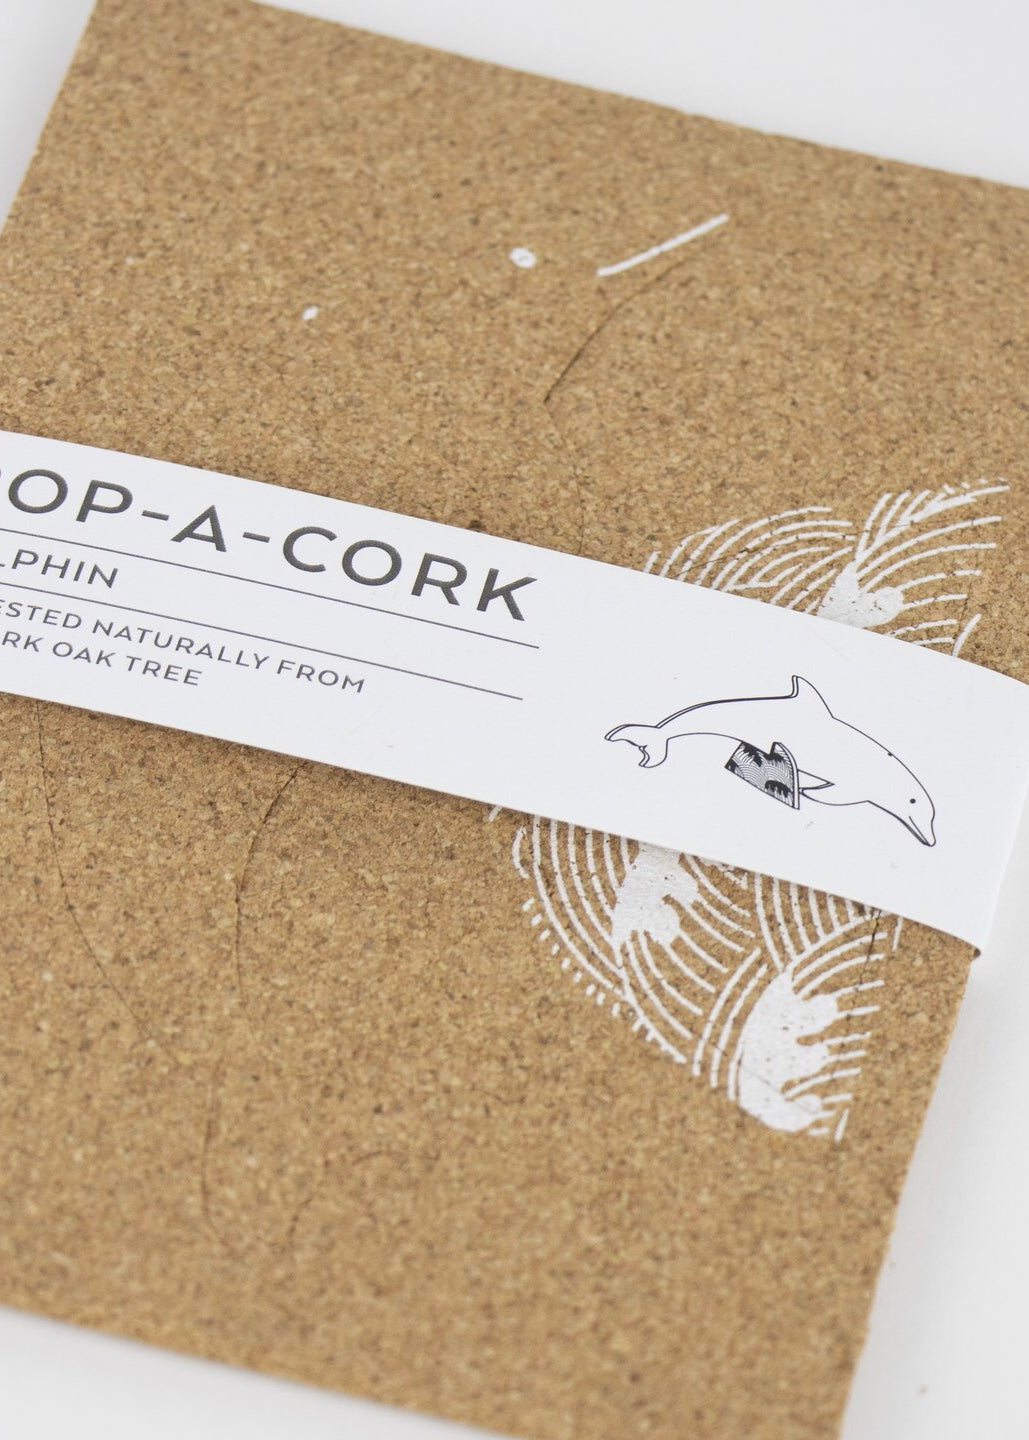 Liga Eco Pop a Cork Dolphin